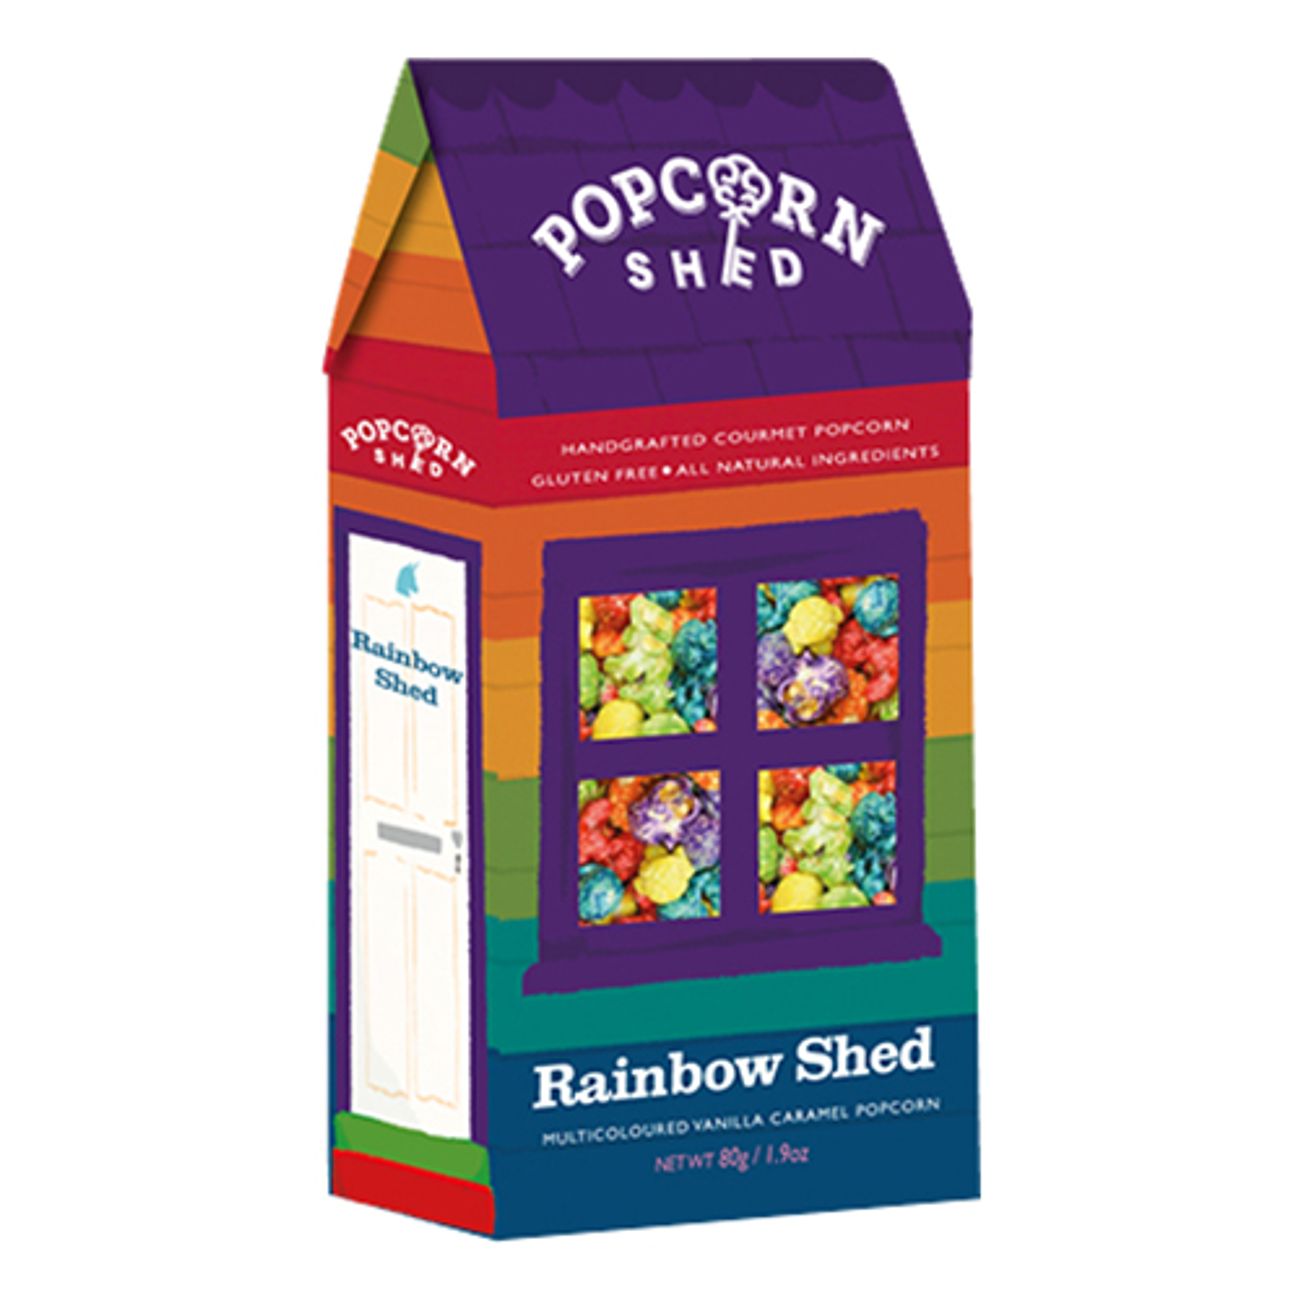 popcorn-rainbow-shed-vanilj-karamell-1